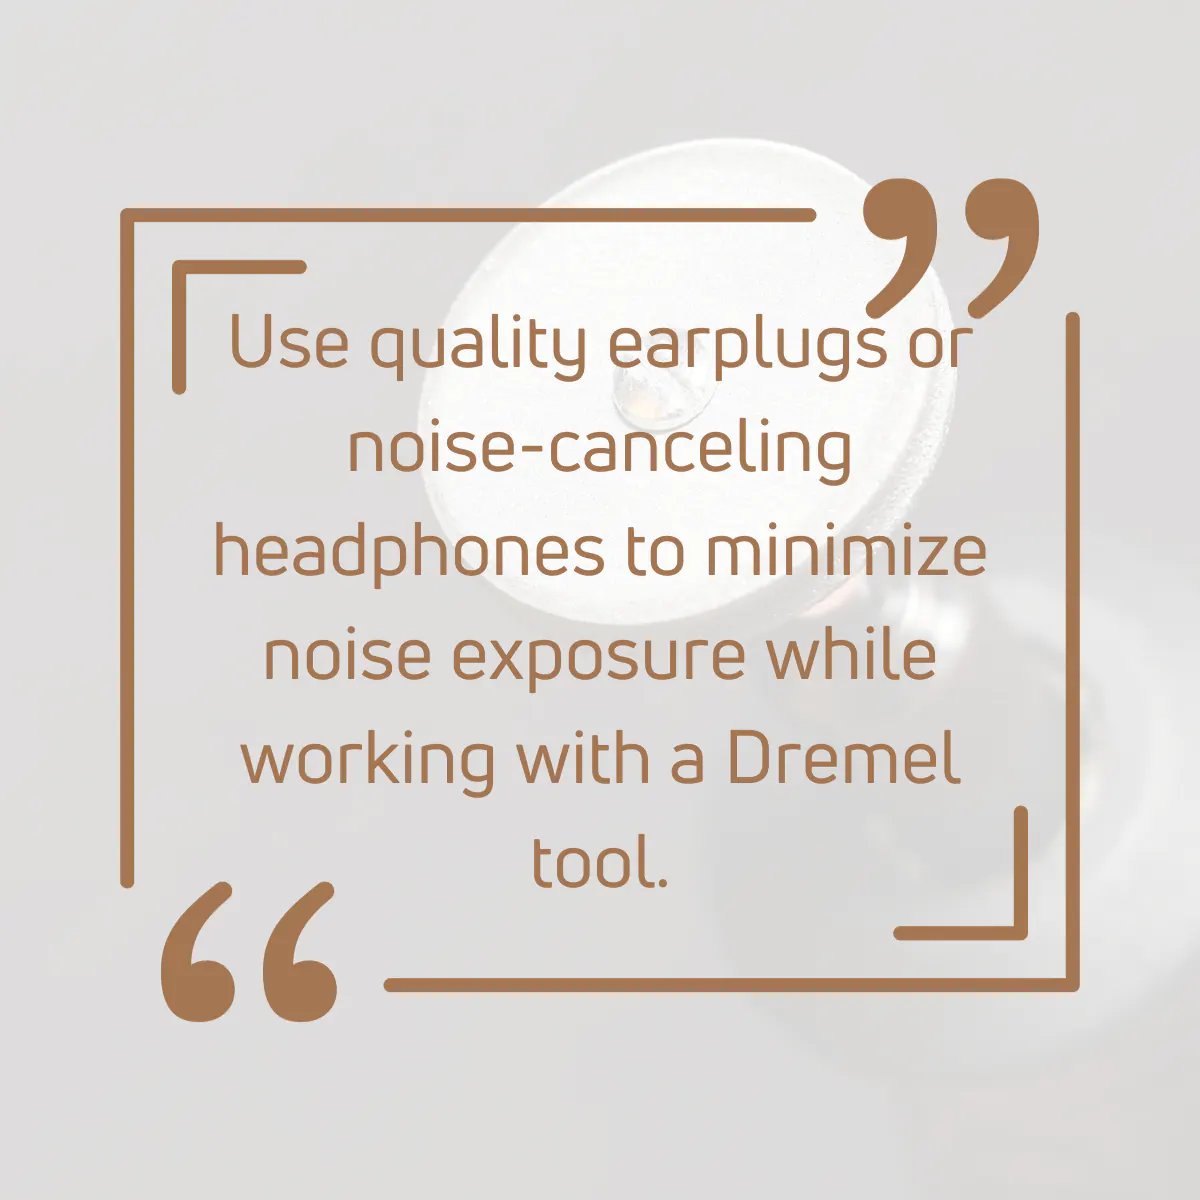 Tip for making Dremel quiet